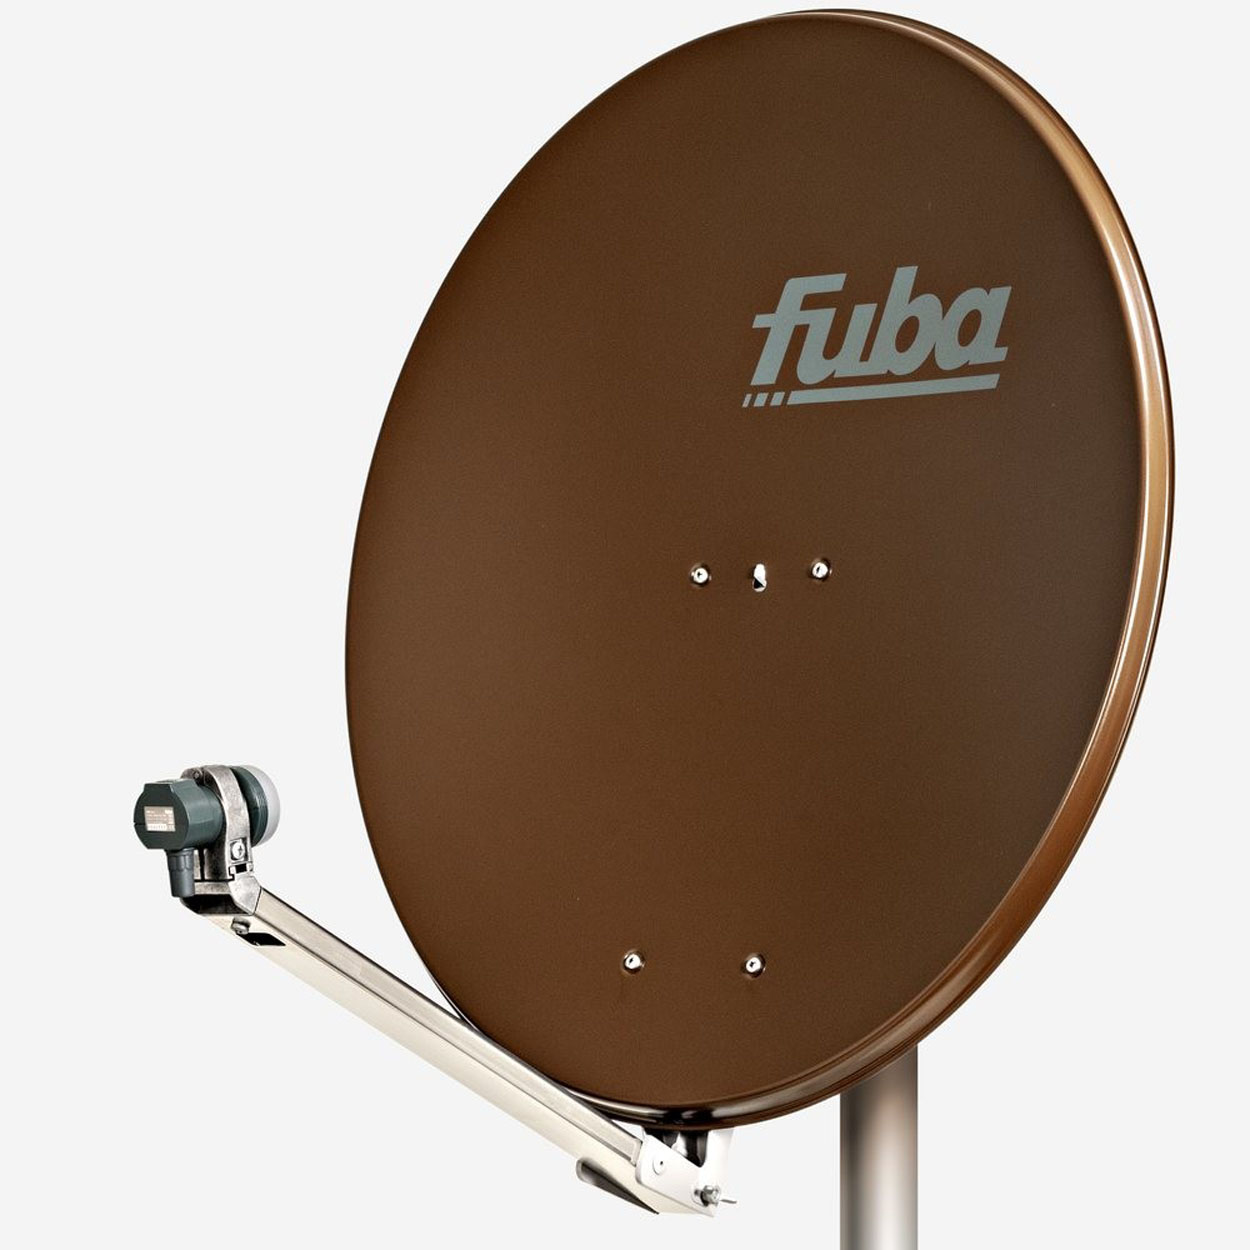 FUBA DAL 801 B Schüssel LNB) 117 Satelliten cm, (80 Sat LNB Anlage Single Sat Teilnehmer Anlage Single DEK 1